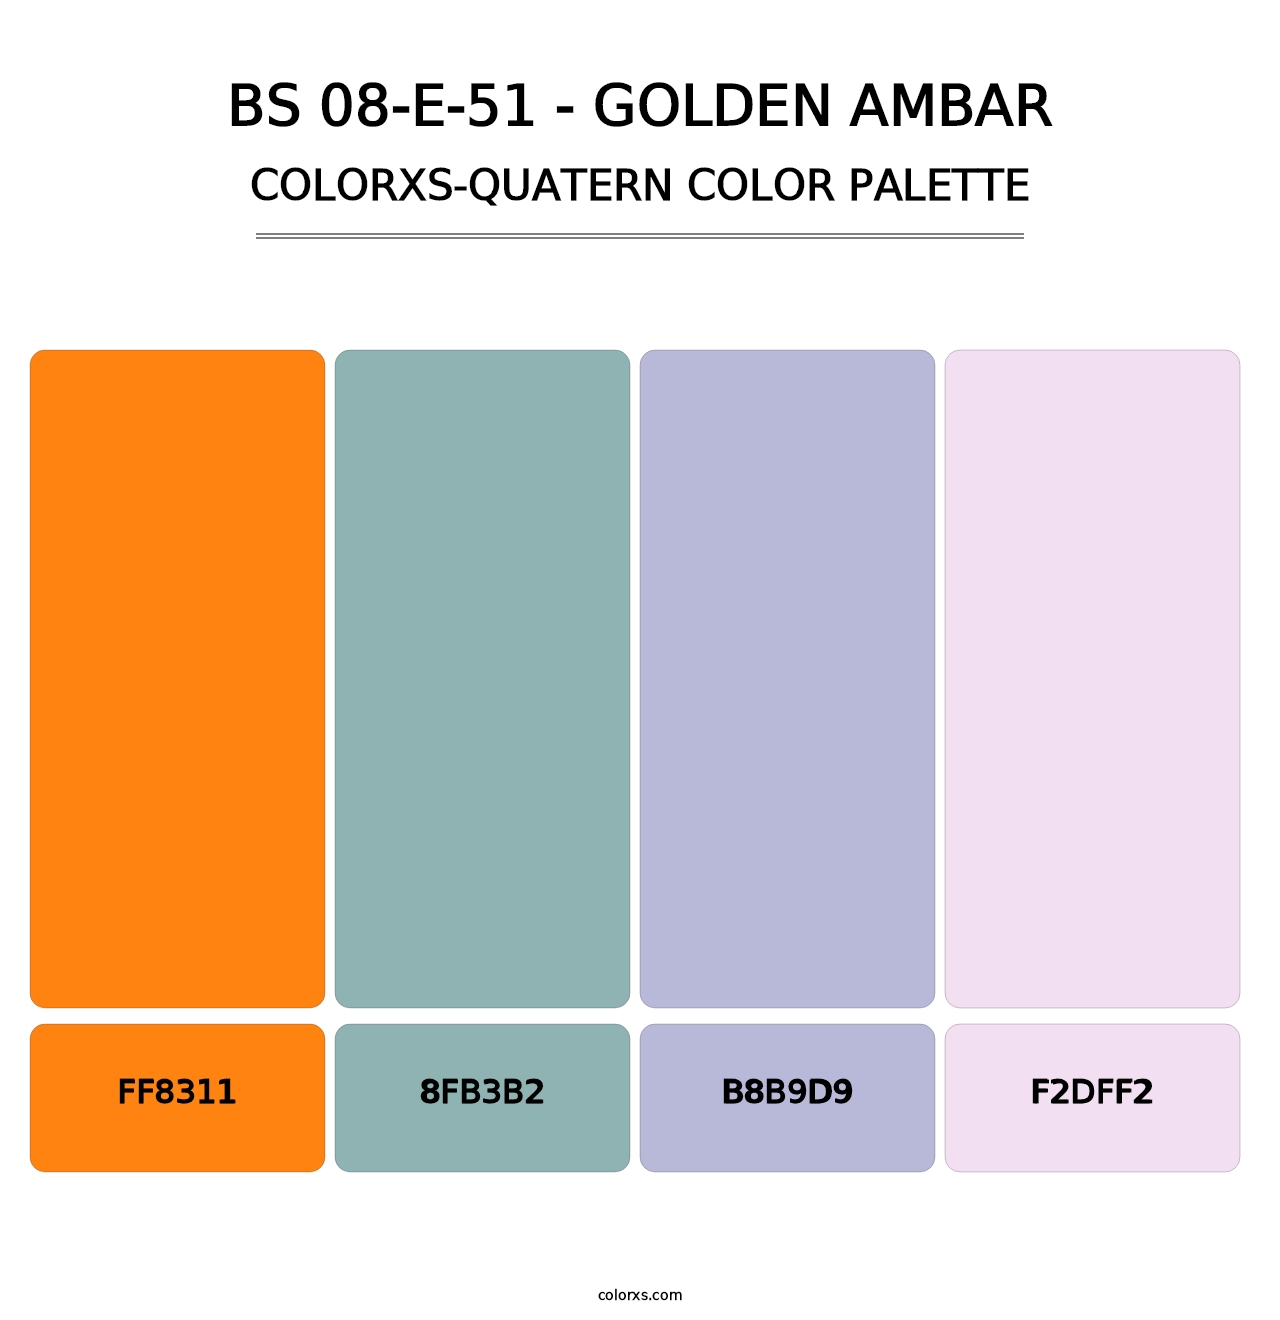 BS 08-E-51 - Golden Ambar - Colorxs Quatern Palette